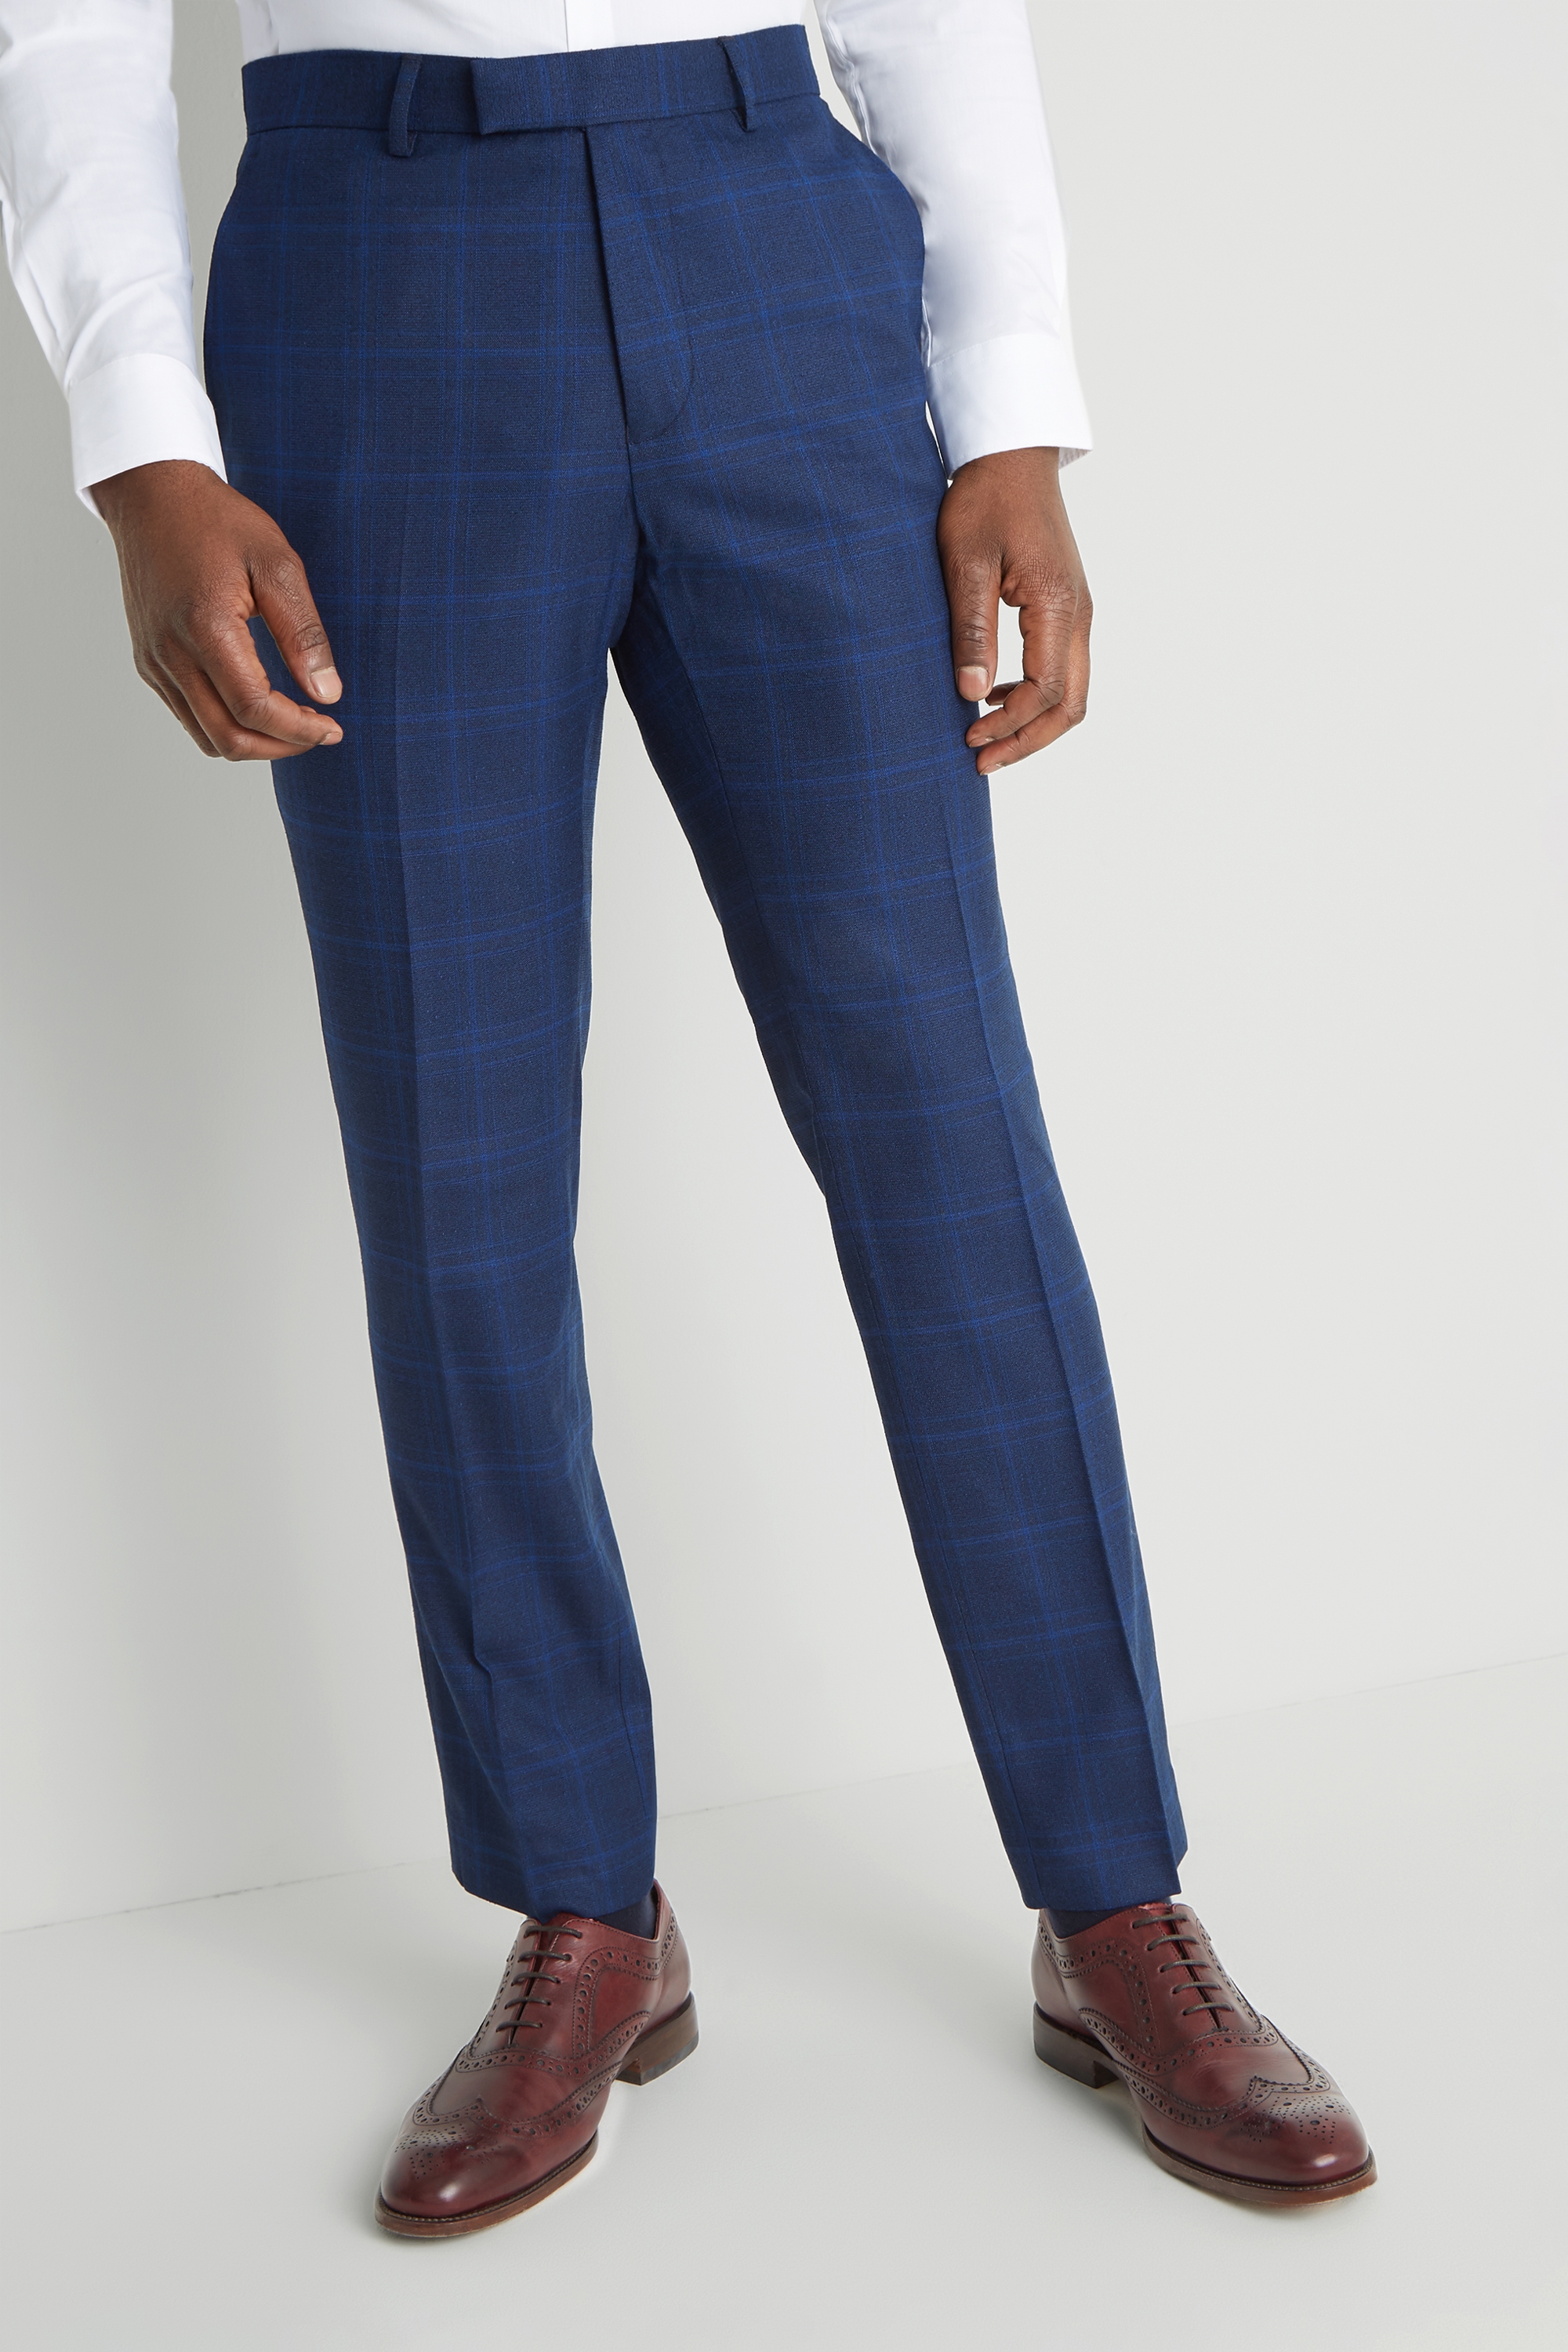 blue pant formal